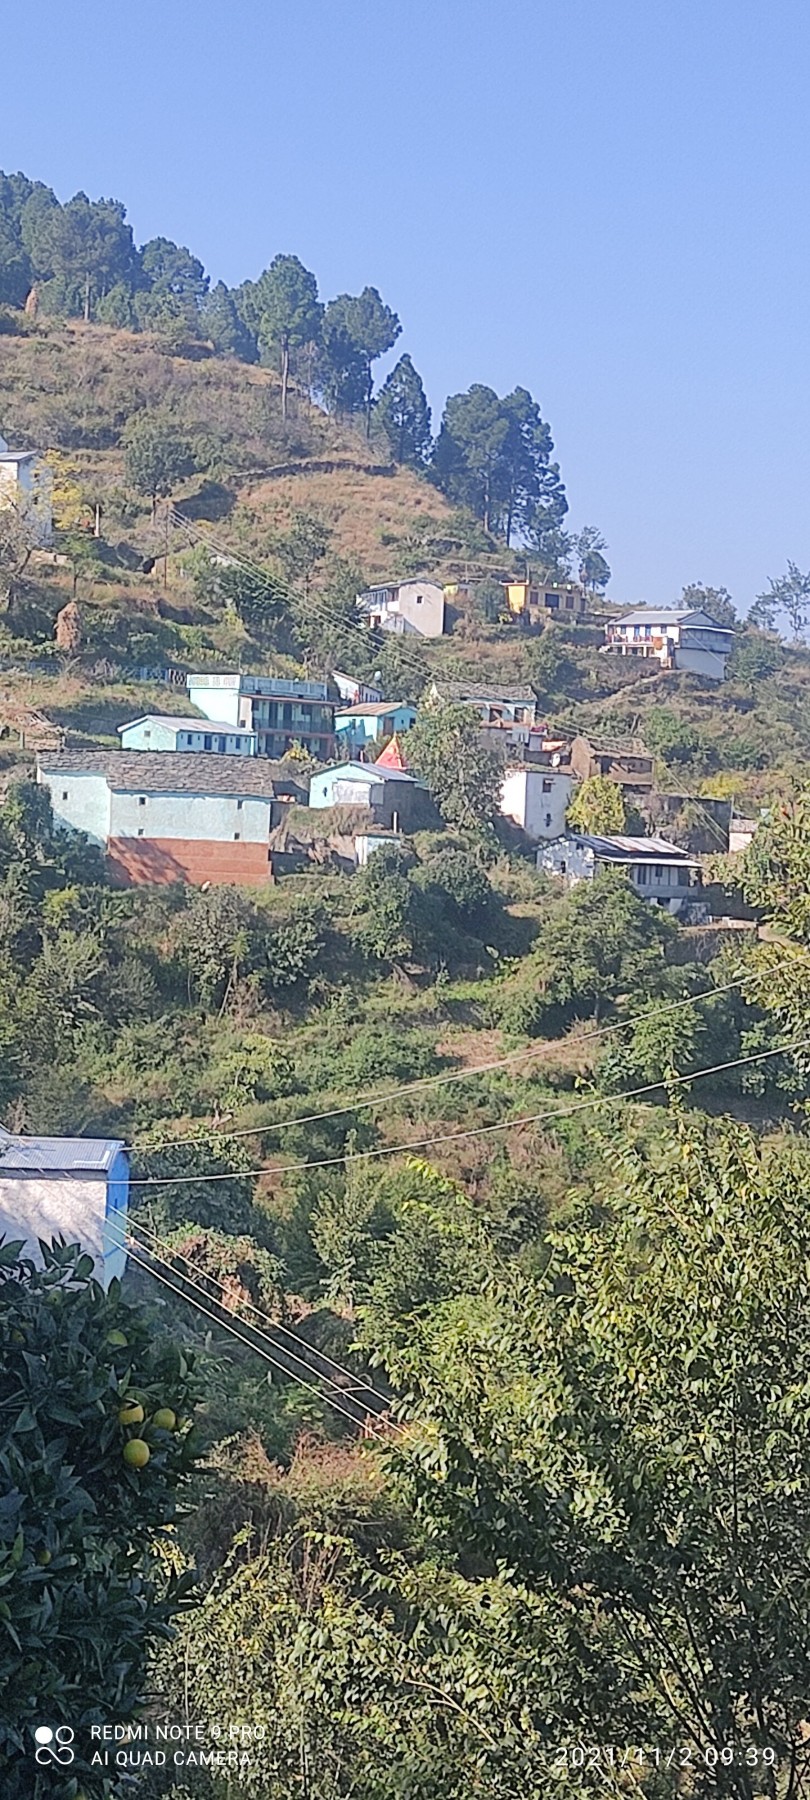 Dhungi village, Pauri Garhwal